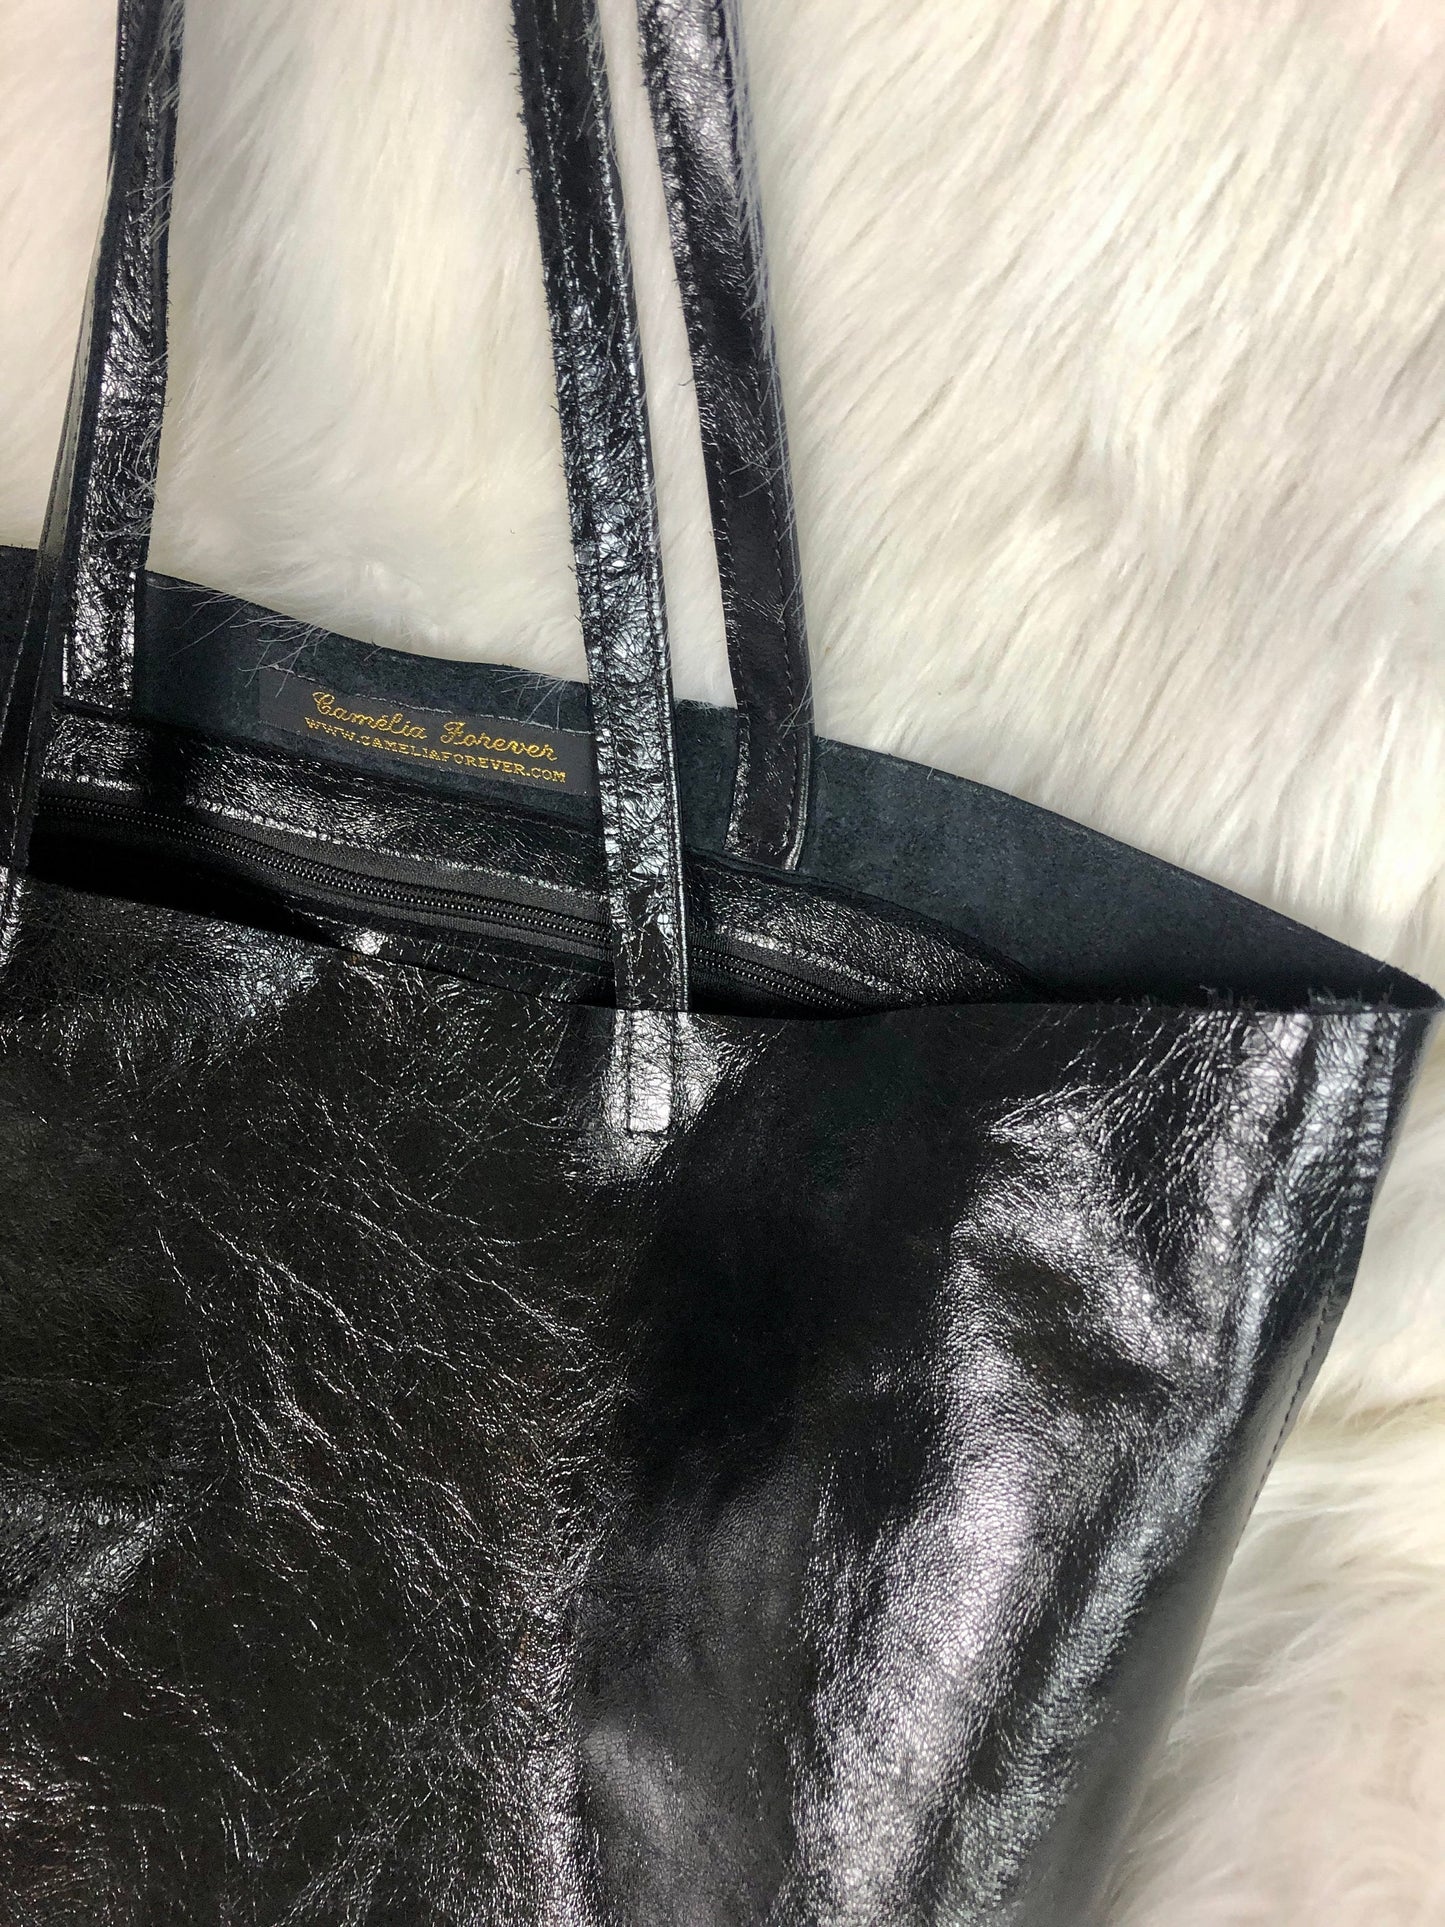 Black leather tote, oversized Italian leather tote, boho bag, large slouchy tote, soft leather bag, large soft shoulder bag